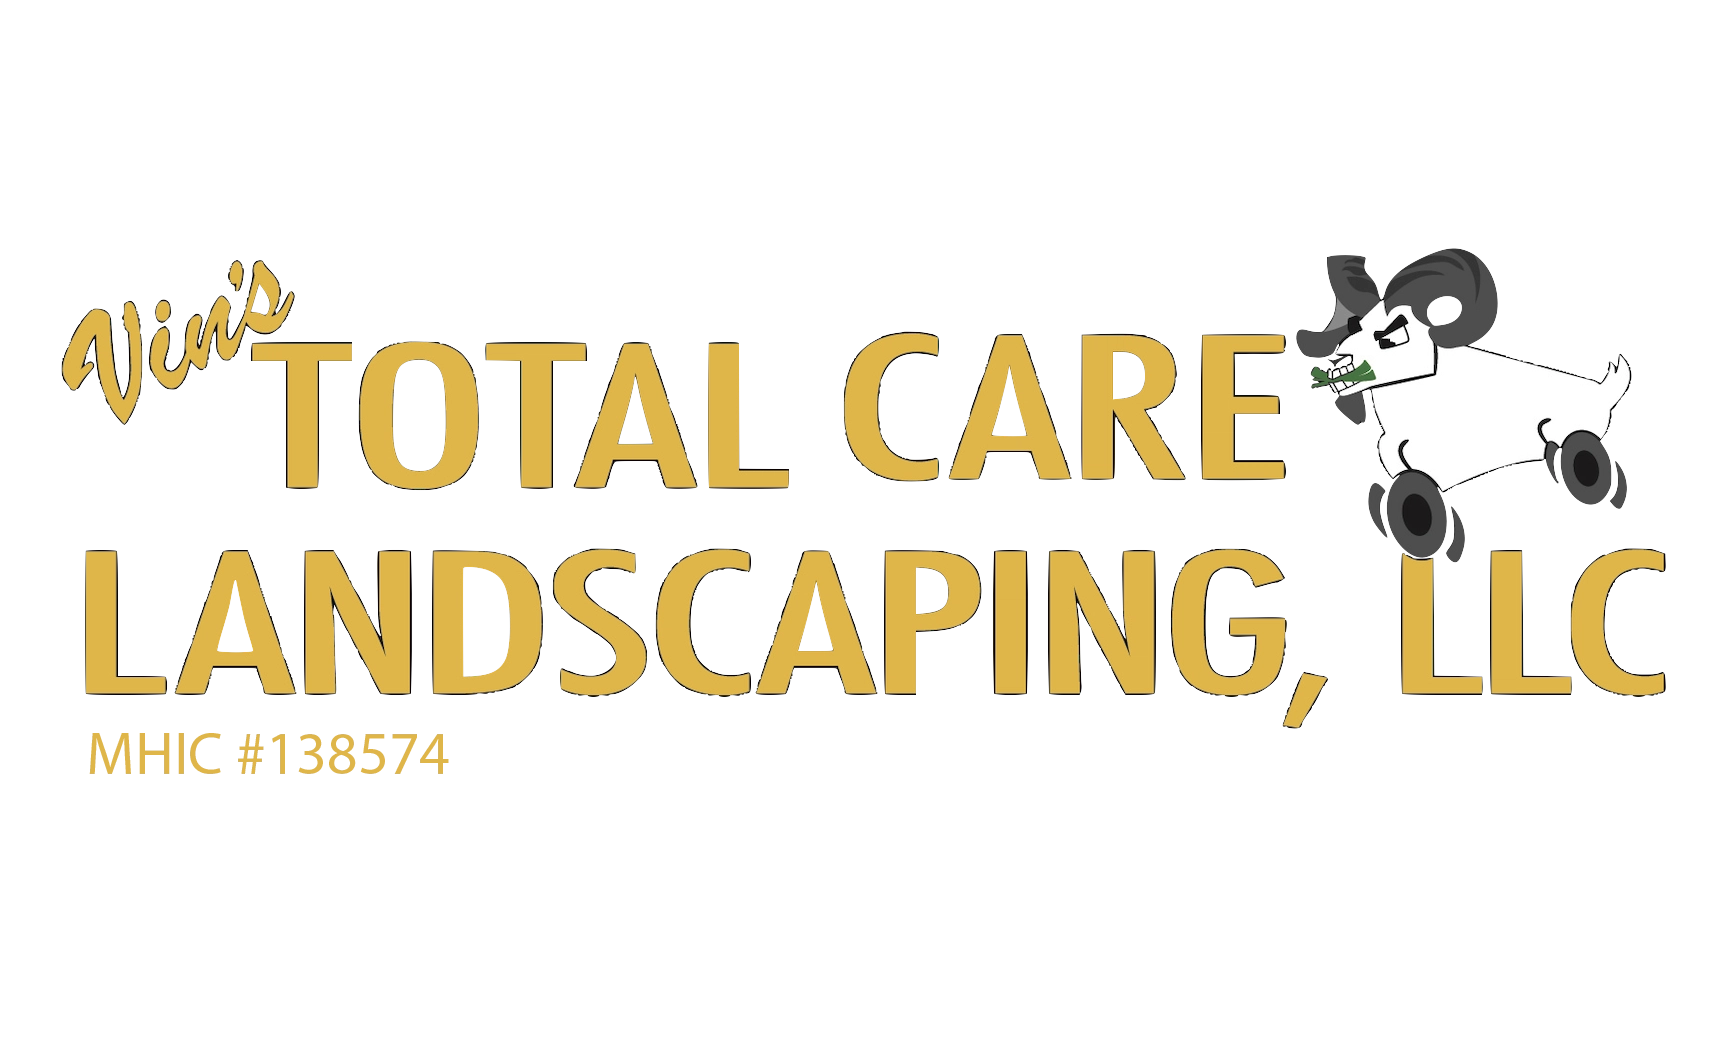 Vin's Total Care Landscaping, LLC Logo